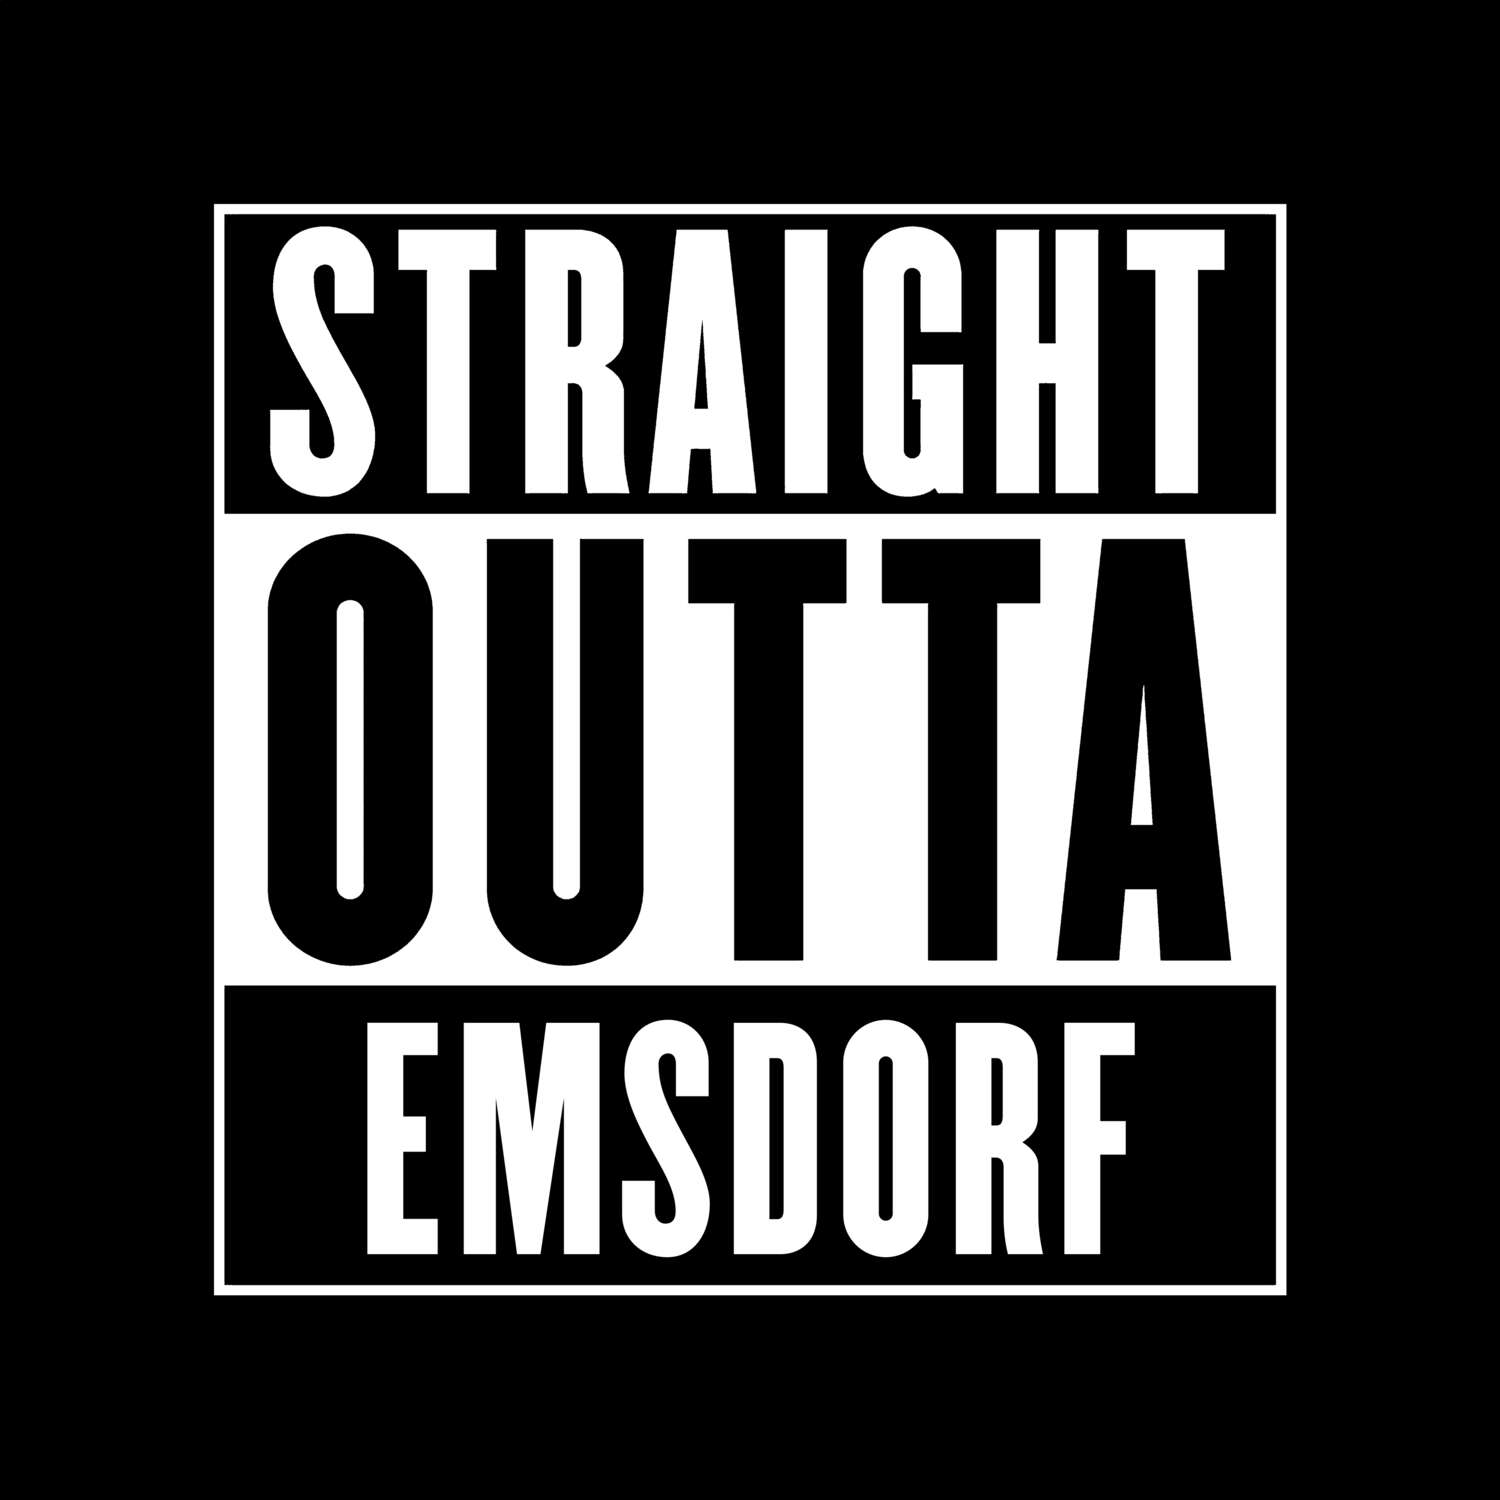 Emsdorf T-Shirt »Straight Outta«